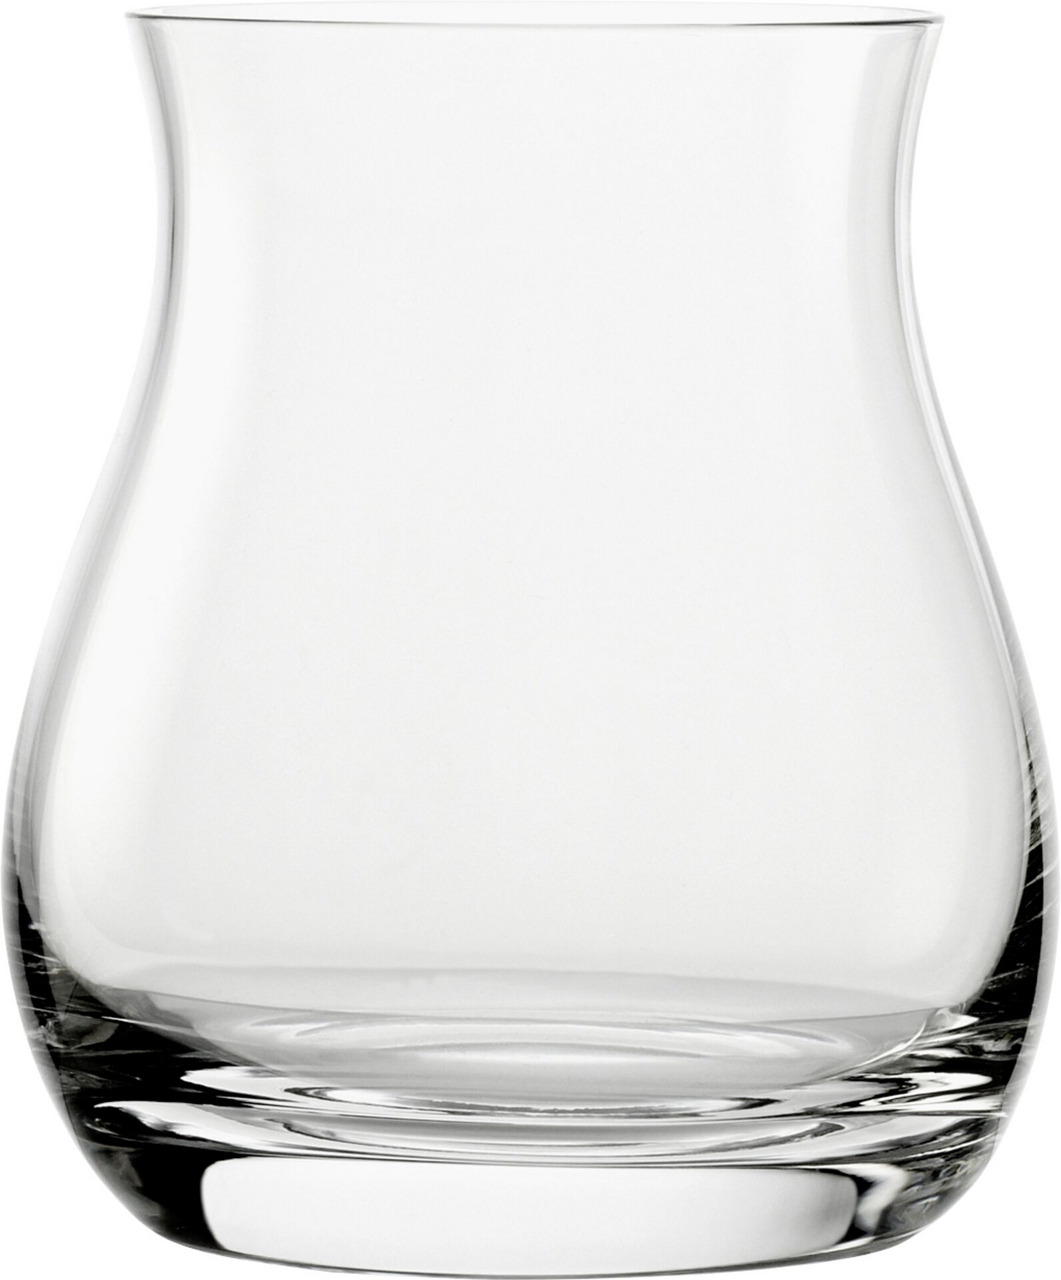 Whiskyglas Canadian